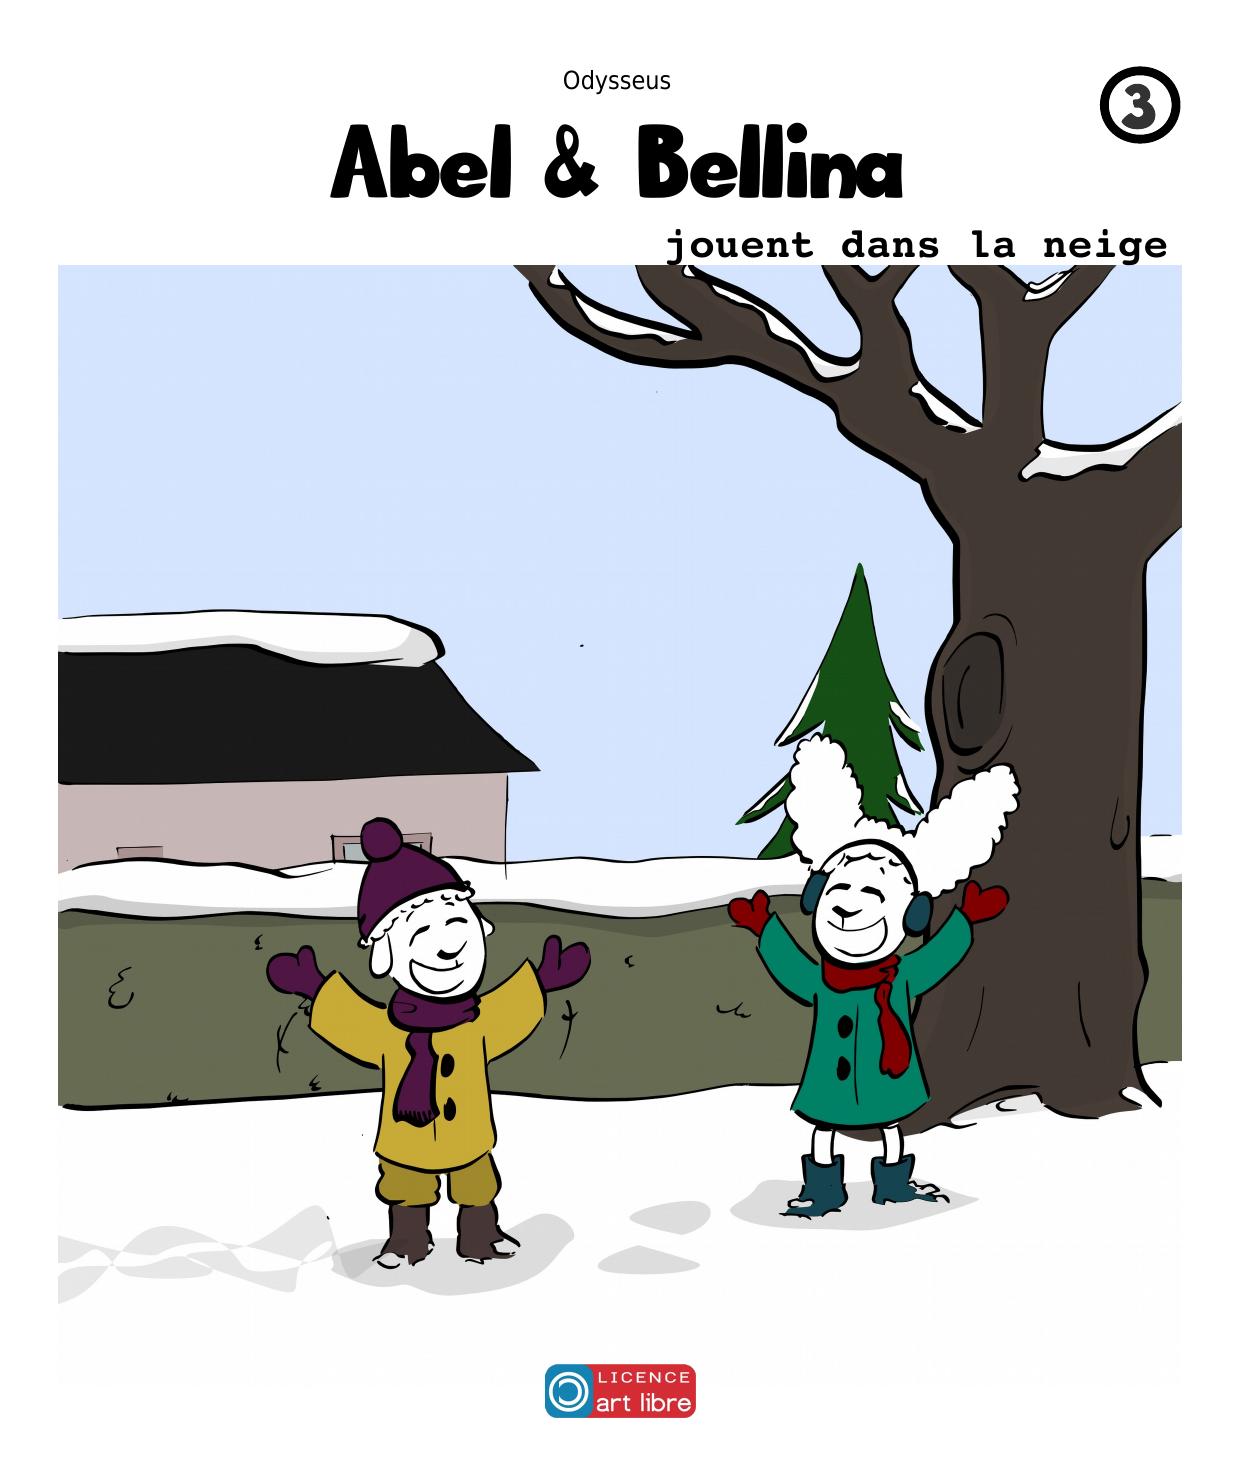 Abel et Bellina jouent dans la neige